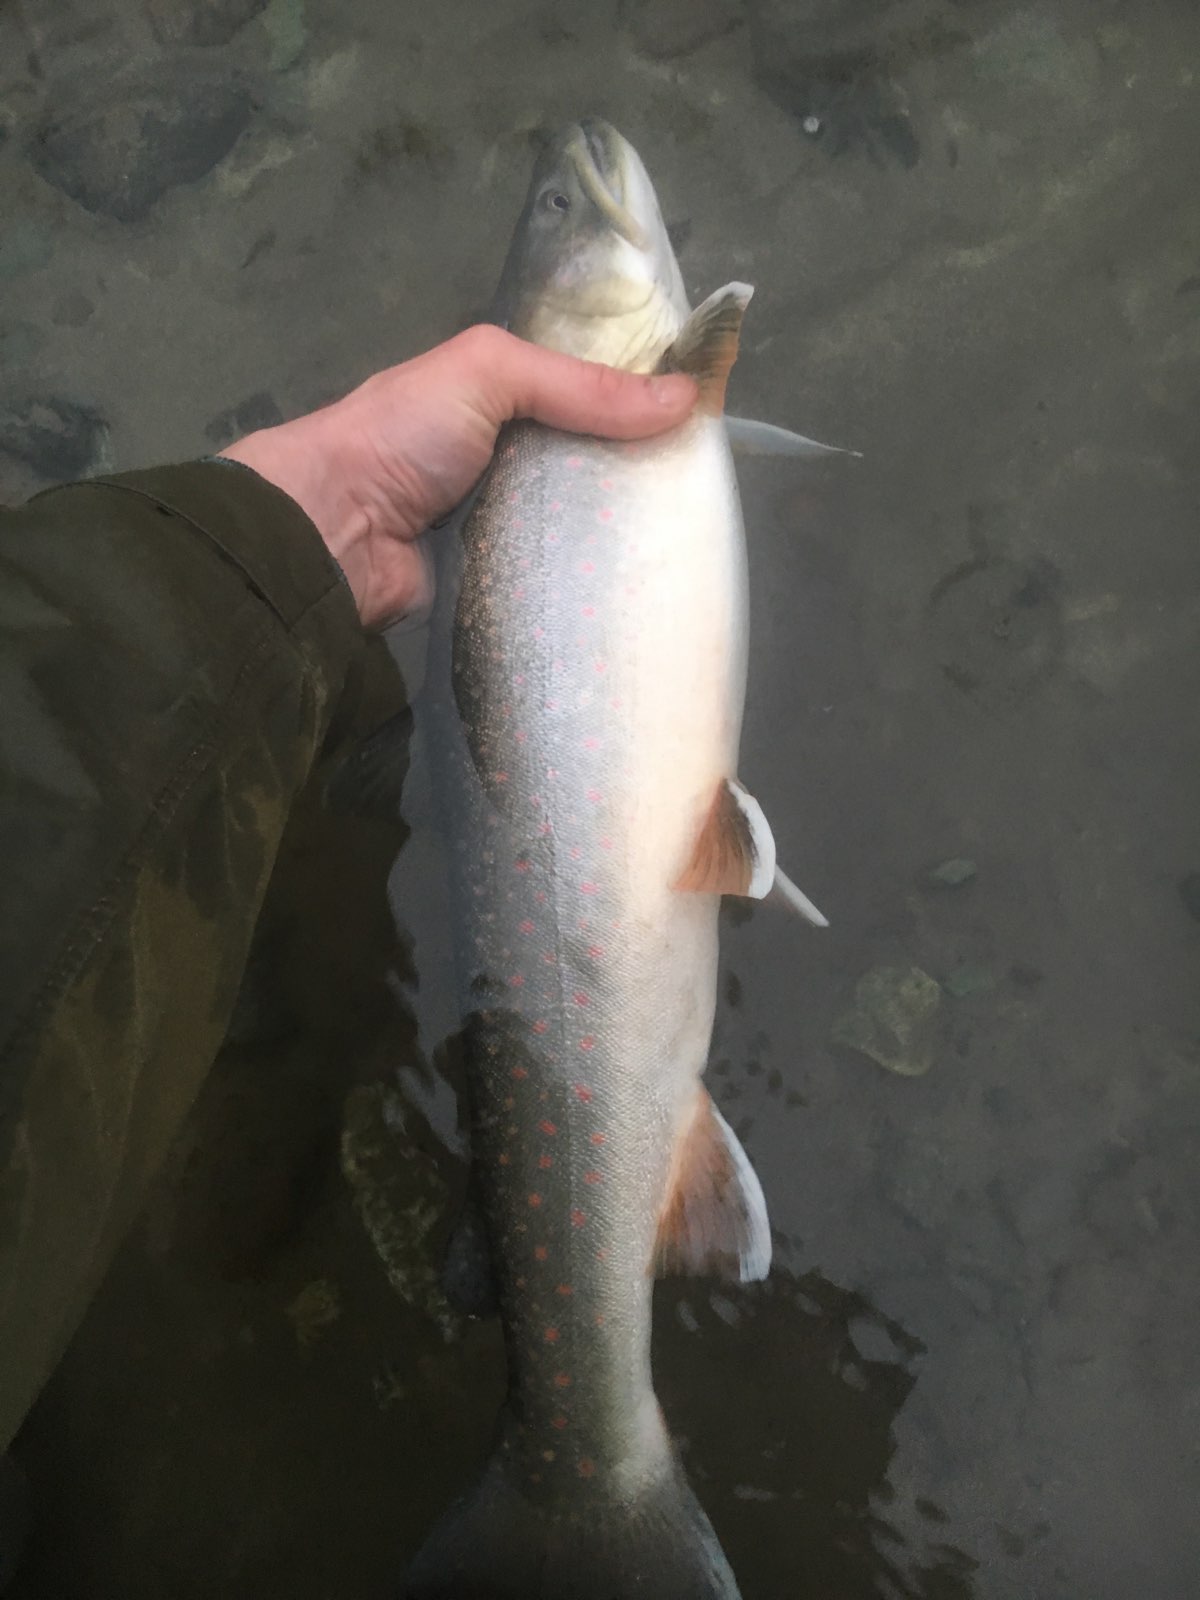 Squamish_River_Bulltrout_Fishing